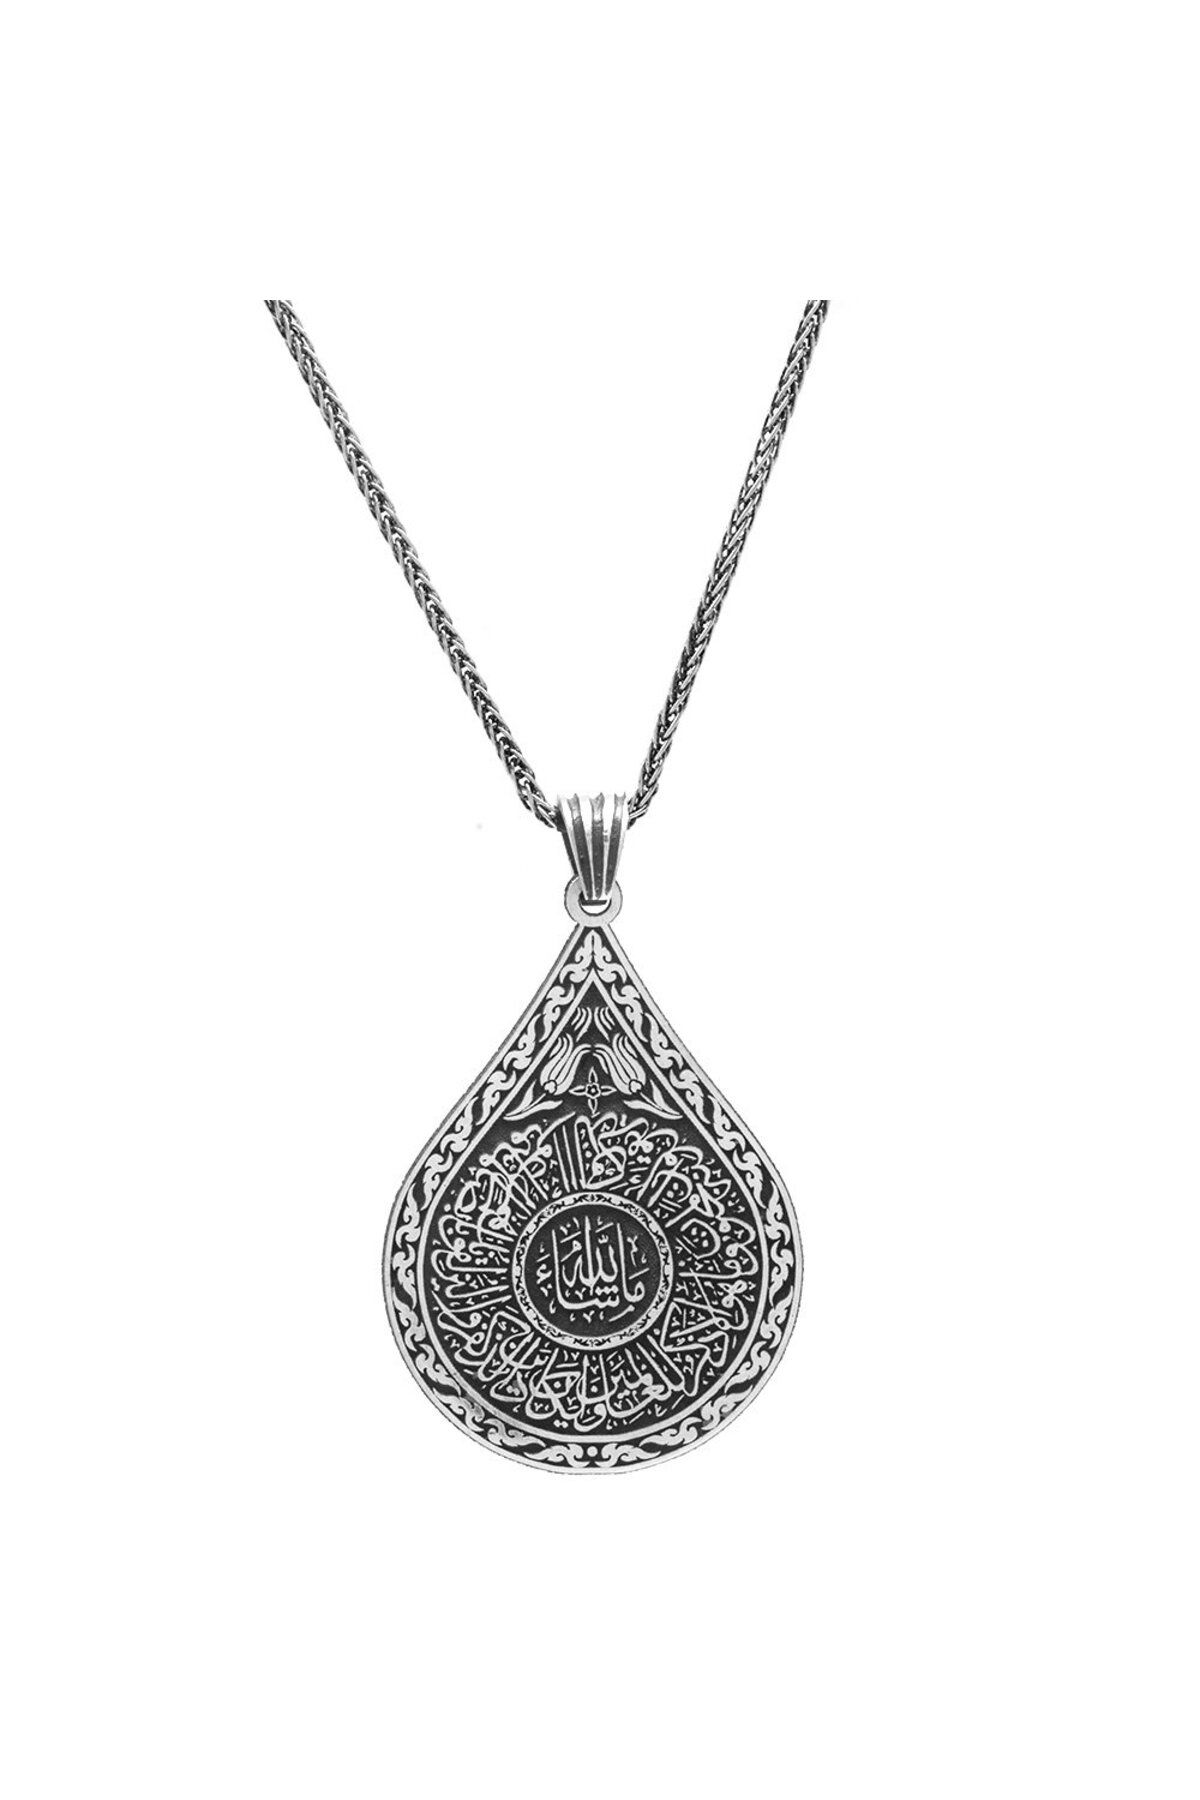 Asel Aktaş Hüsn-i Hat "Nazar Ayeti" Yazılı Kalın Zincirli 925 Ayar Gümüş Madalyon